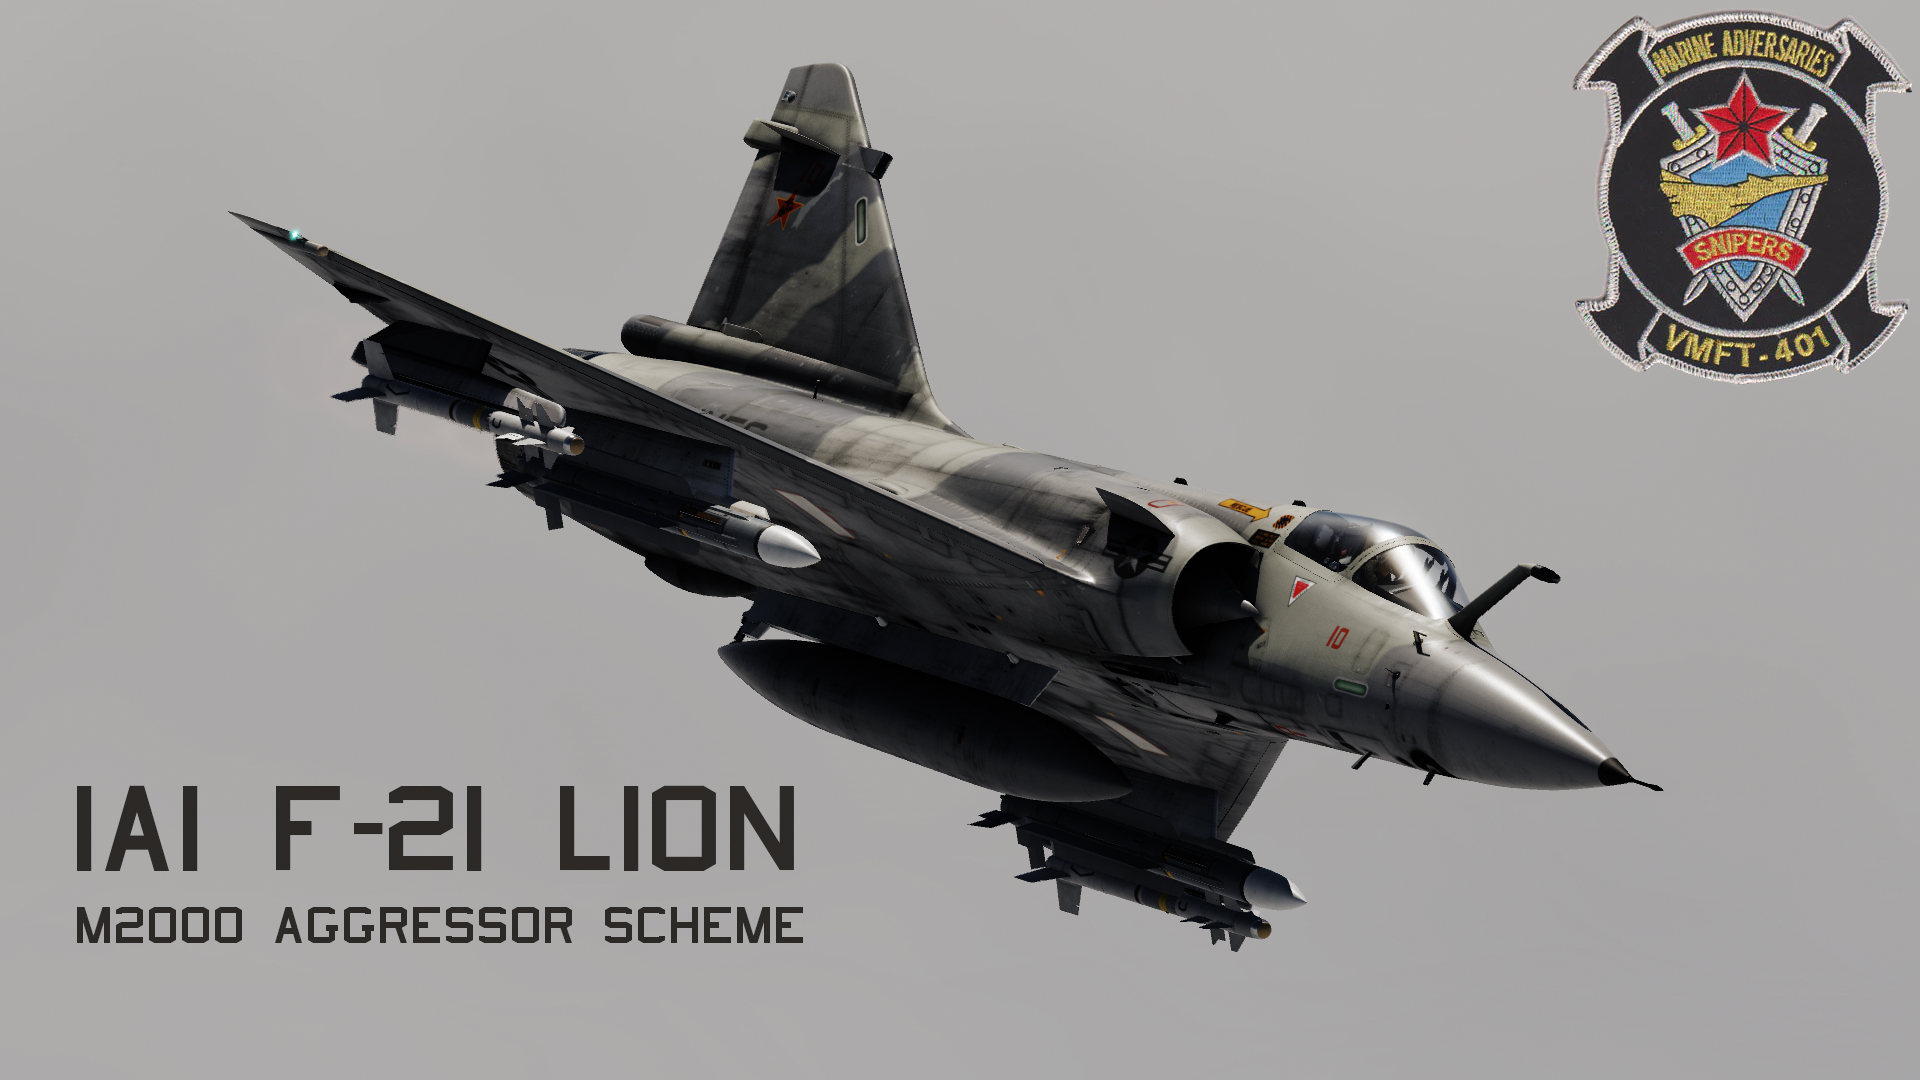 MARINES Aggressor IAI F-21 LION - M2000